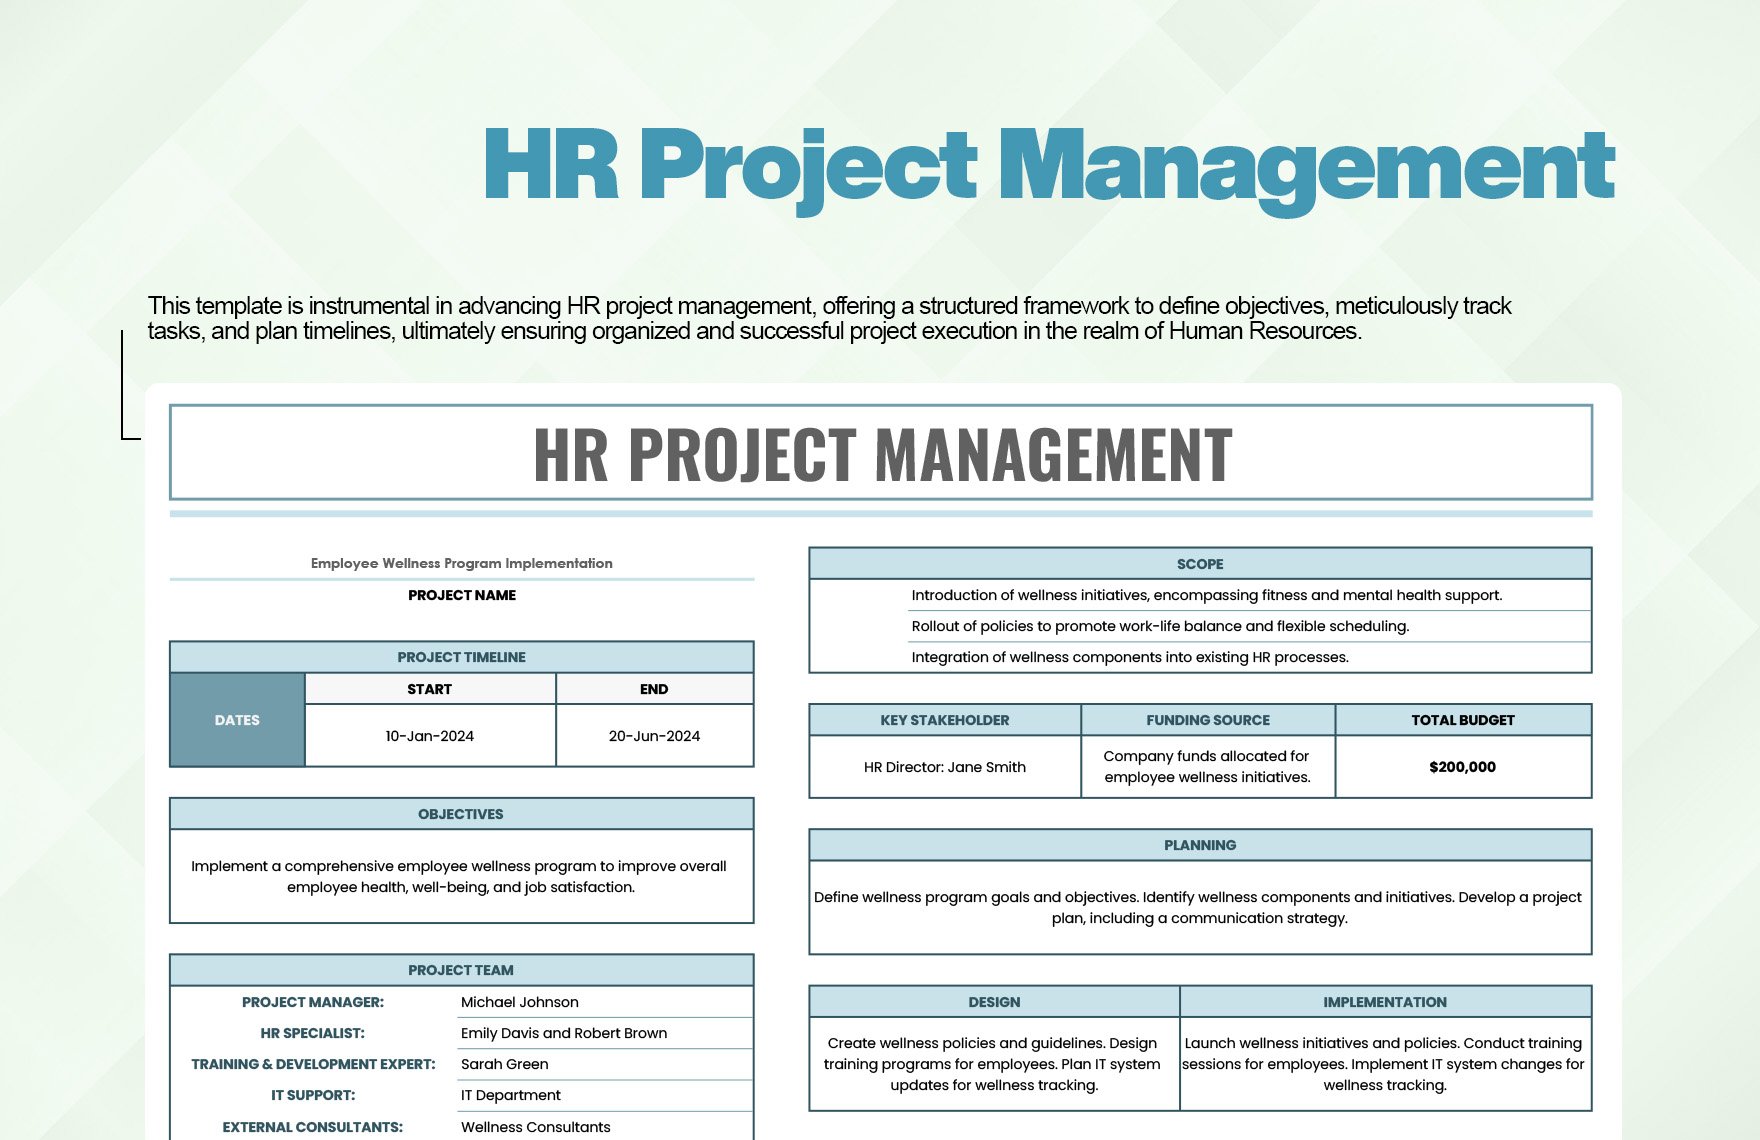 HR Project Management Template